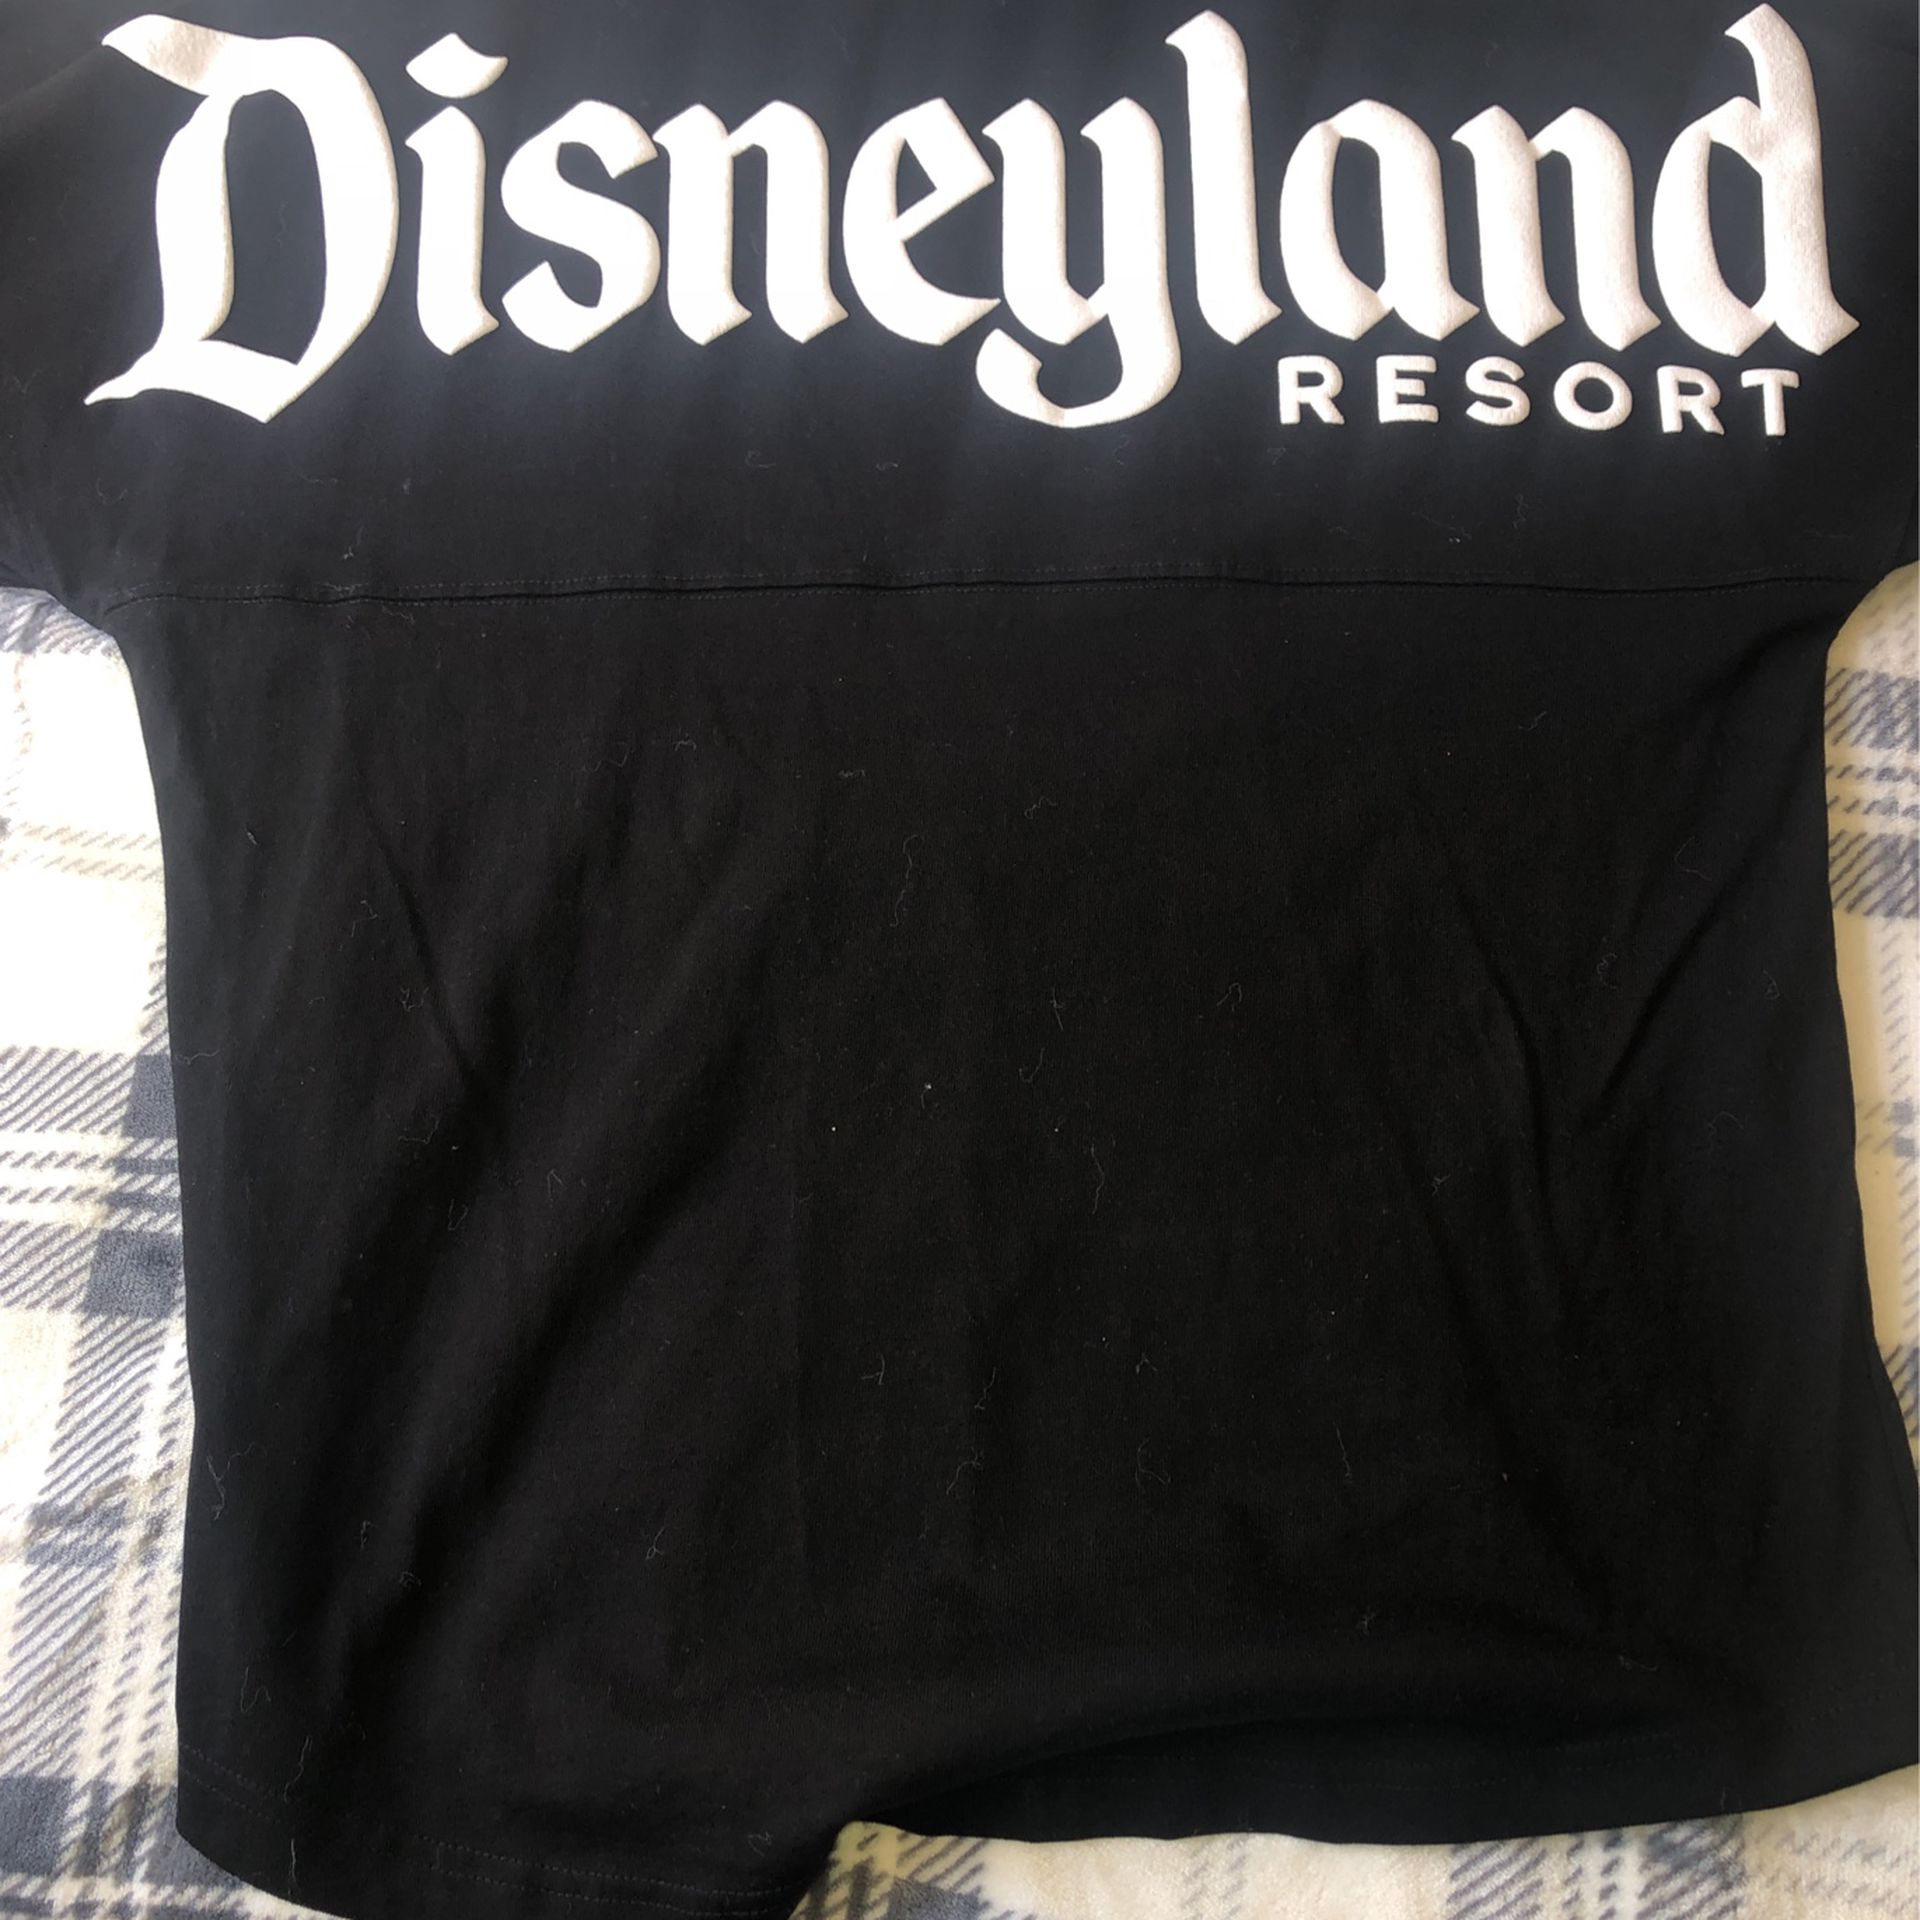 Disneyland Resort Spirit Jersey 